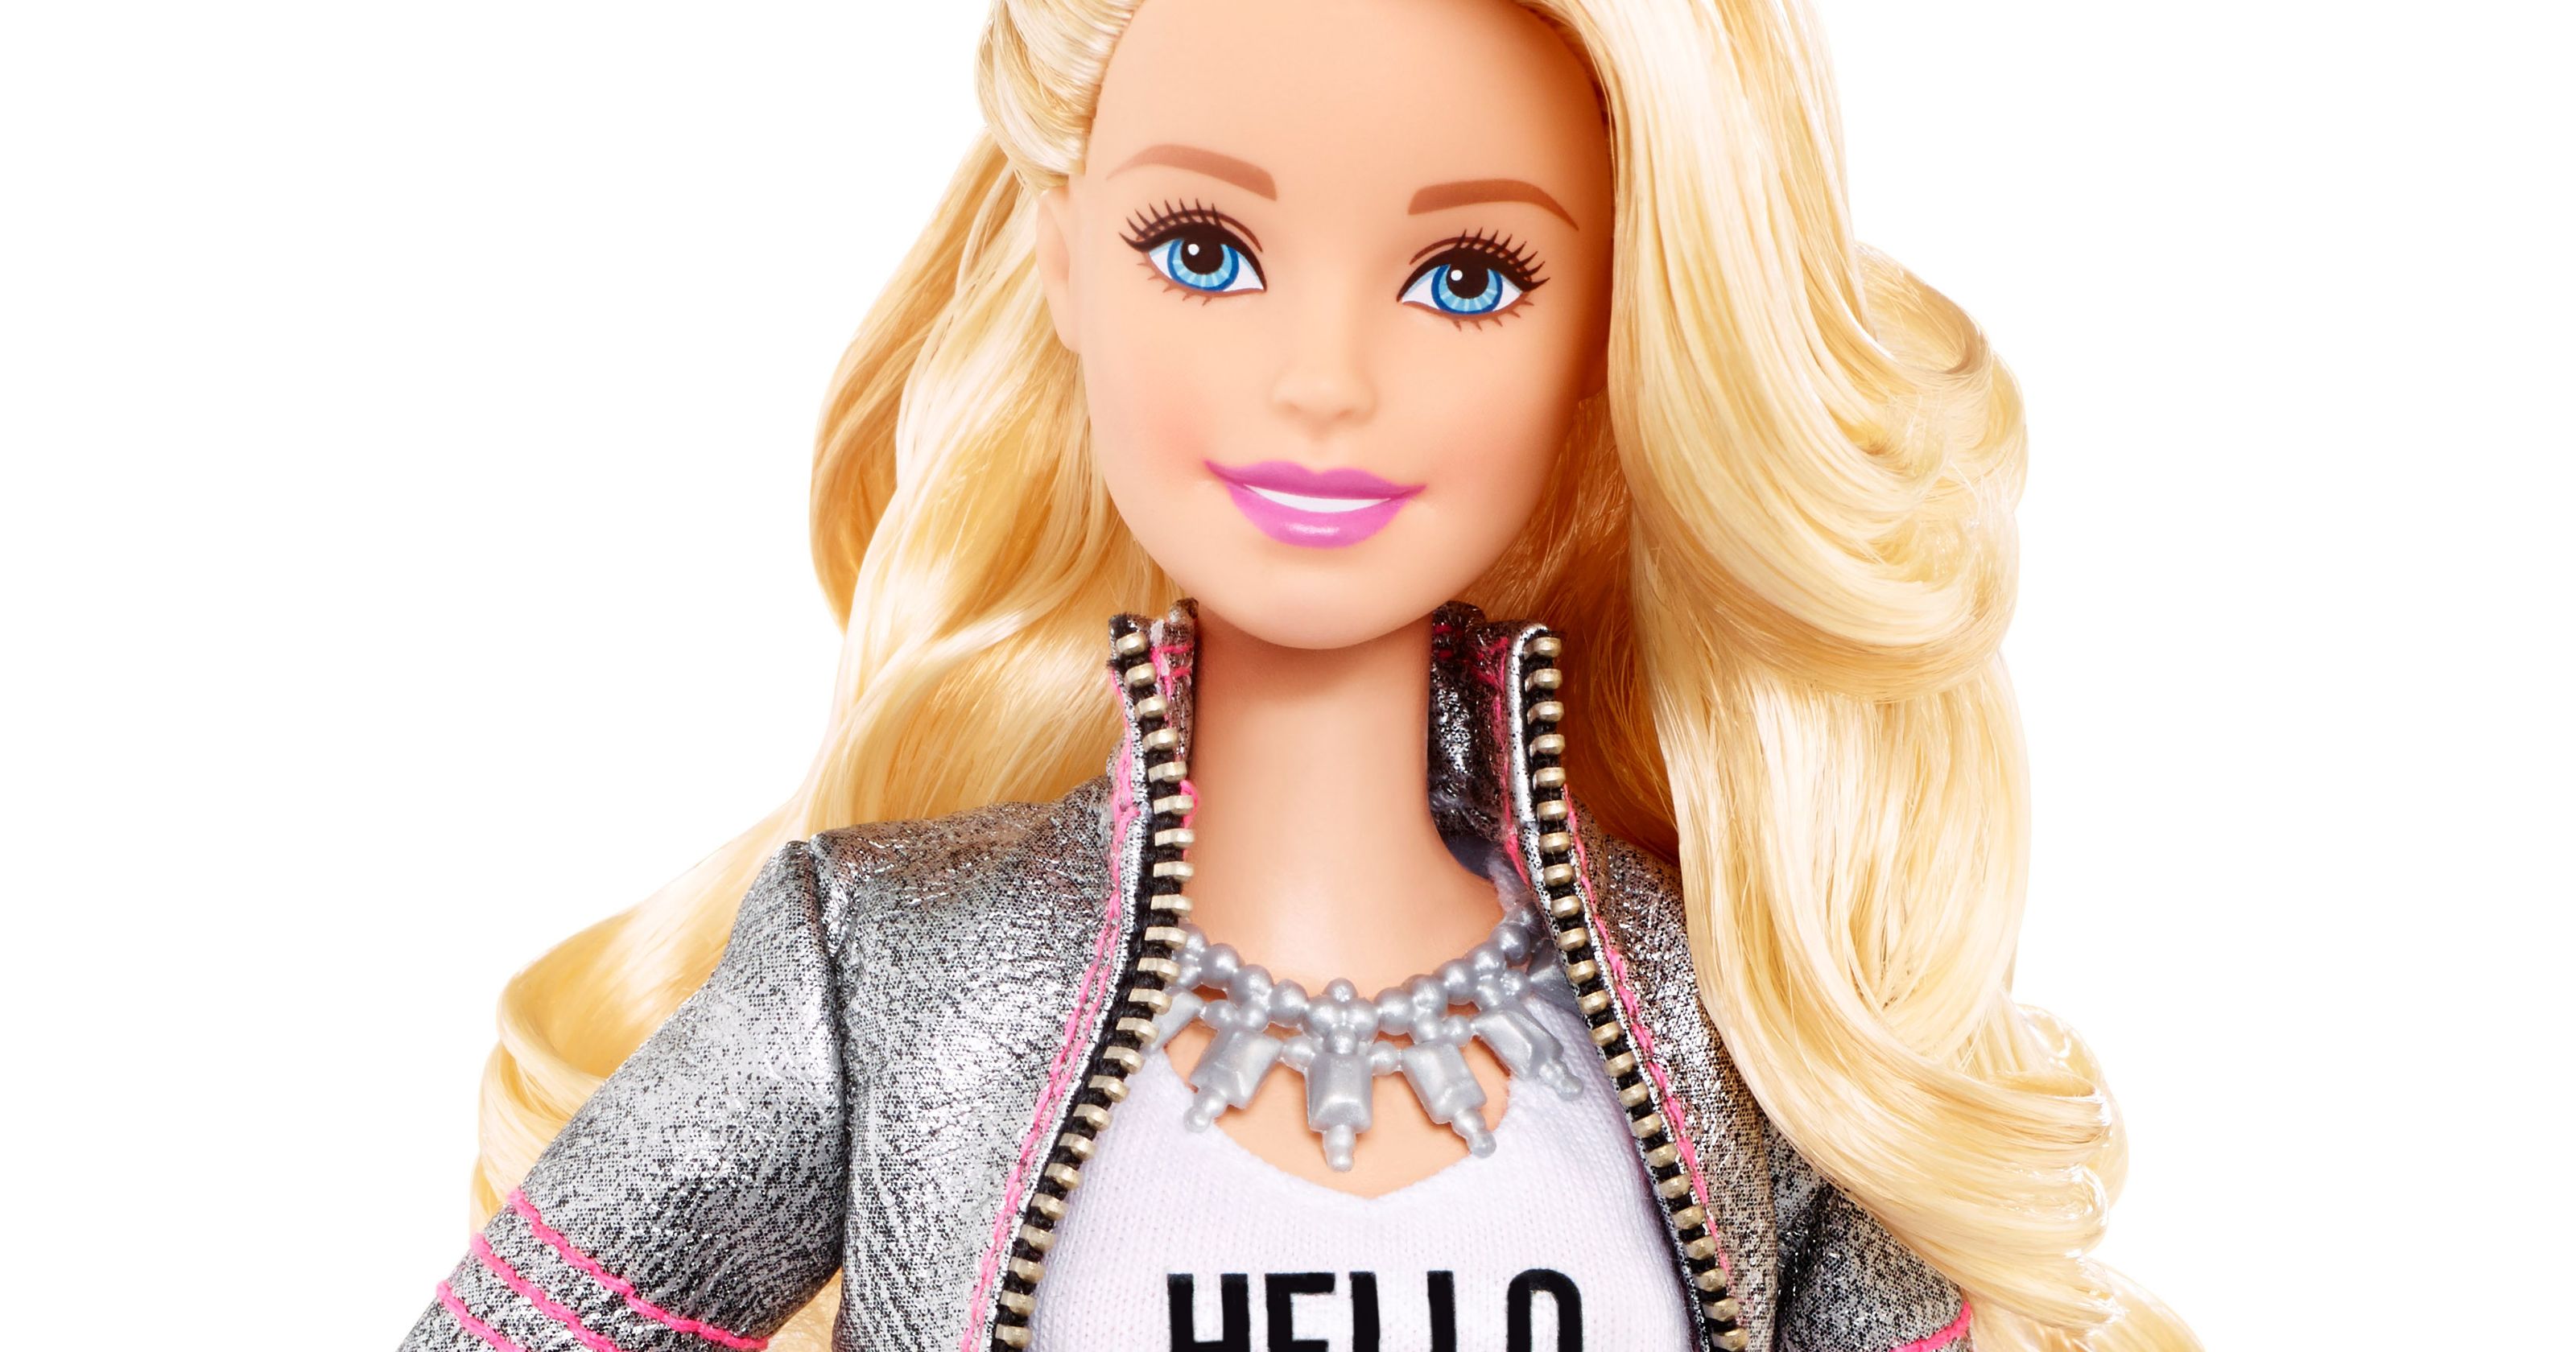 Barbie-Doll Beauty' A Poem About Unrealistic Beauty Standards ...